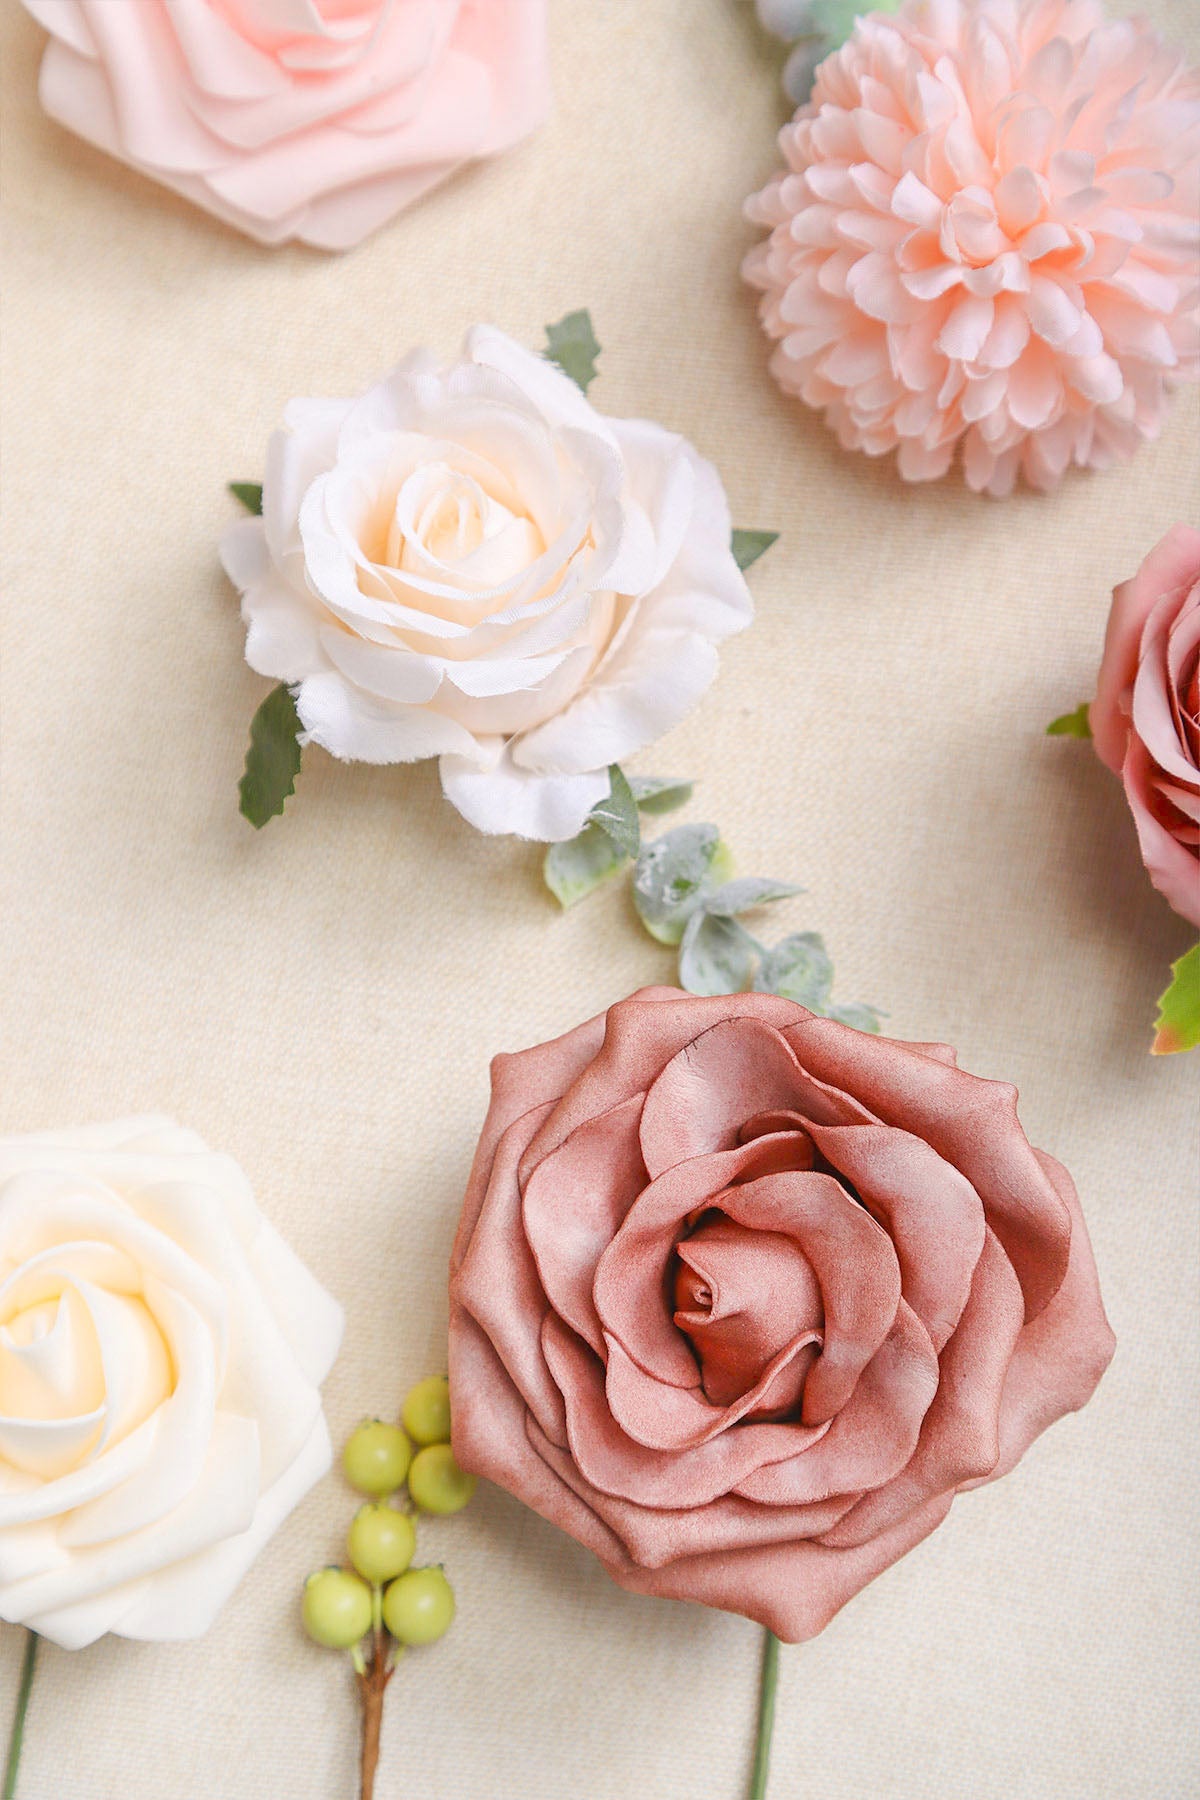 Artificial Flowers - Wedding Flower Box Set - DIY Bridal Bouquet, Centerpieces, Aisle Flower Decor - Dusty Pink & Blush Pink